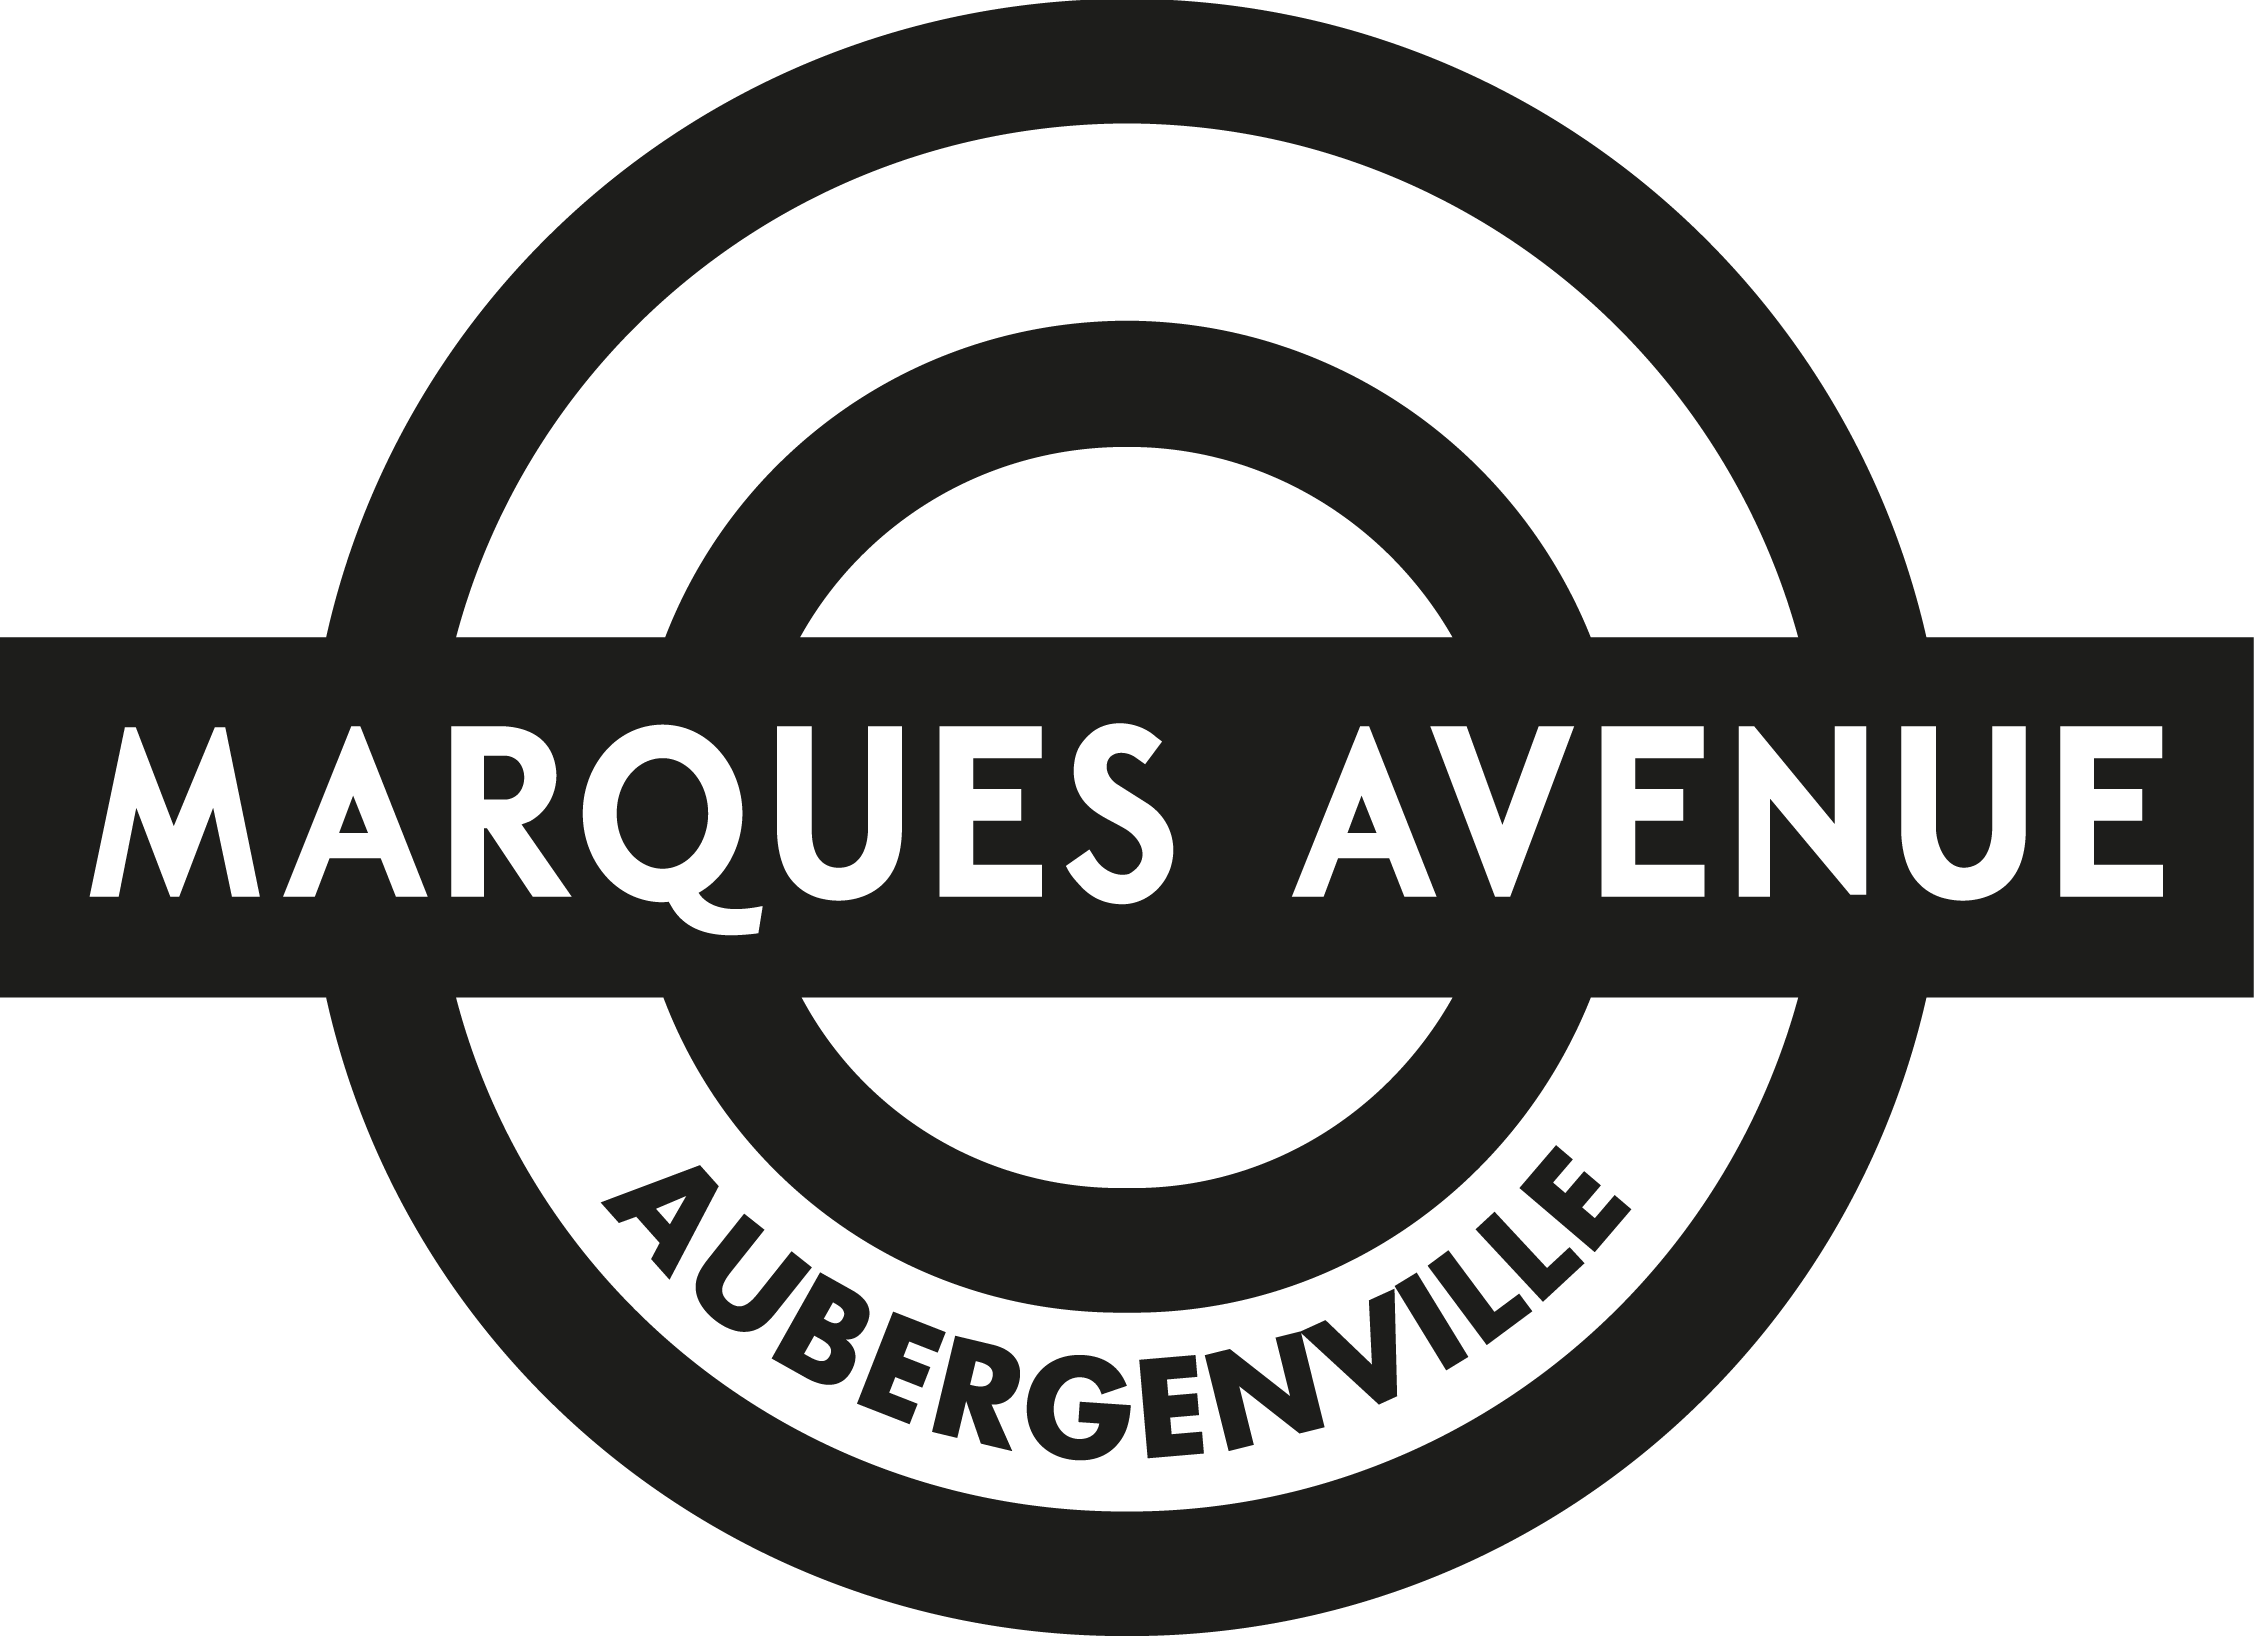 converse marque avenue aubergenville